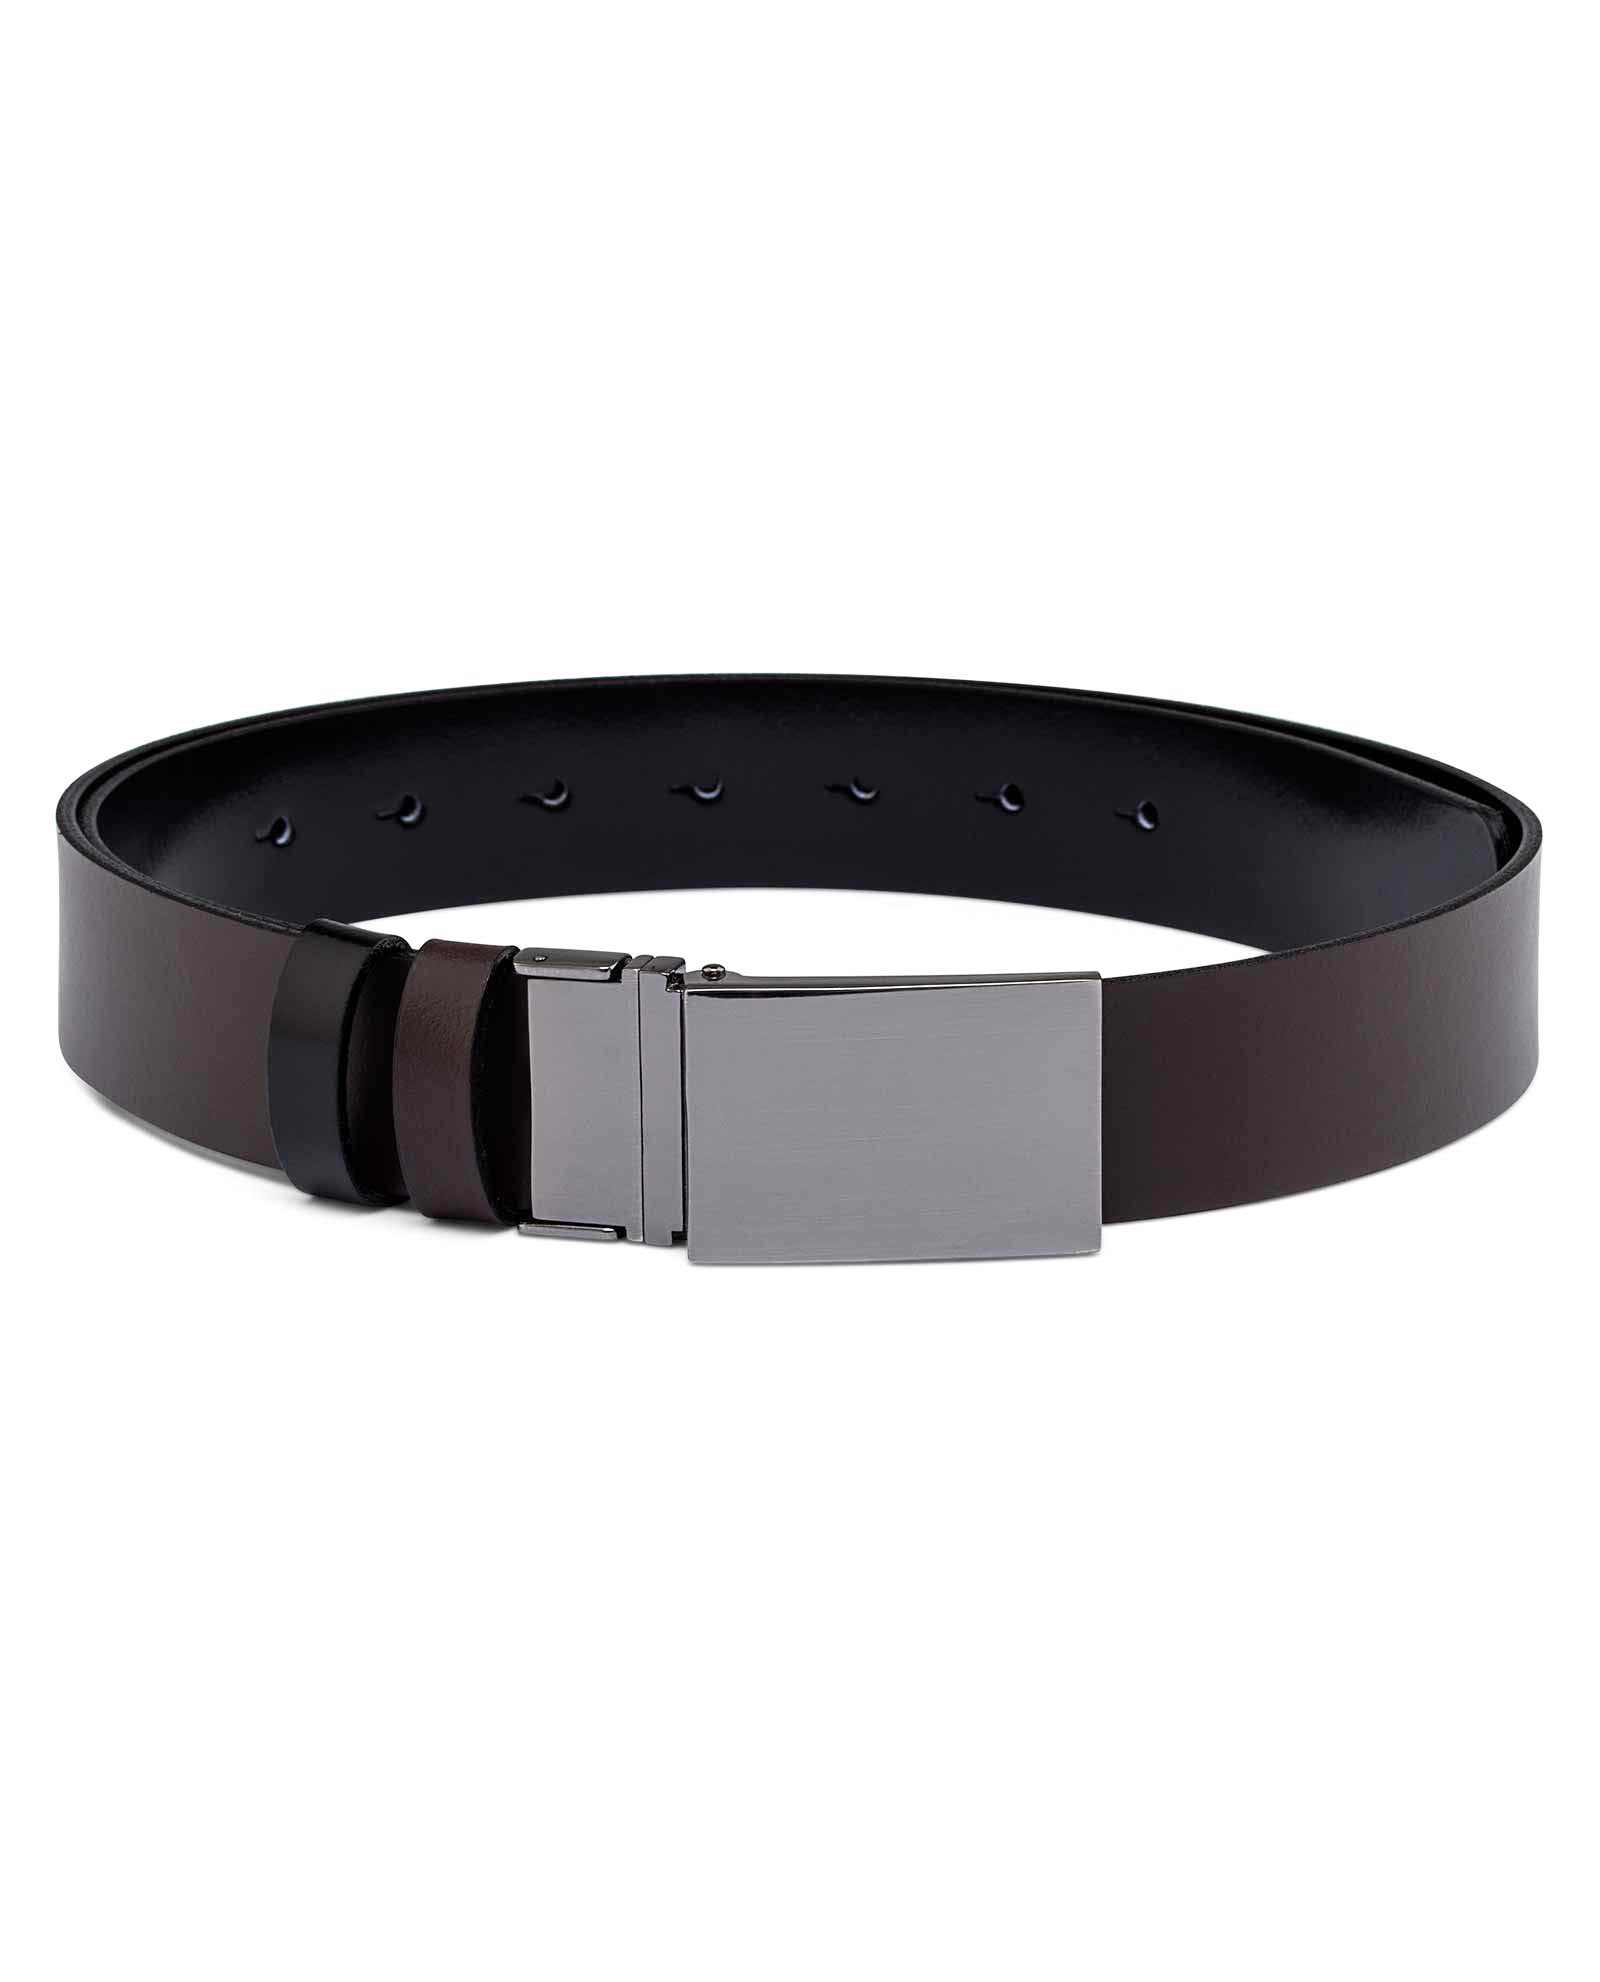 Buy Men's Patent Leather Belt - Reversible Buckle - LeatherBeltsOnline.com